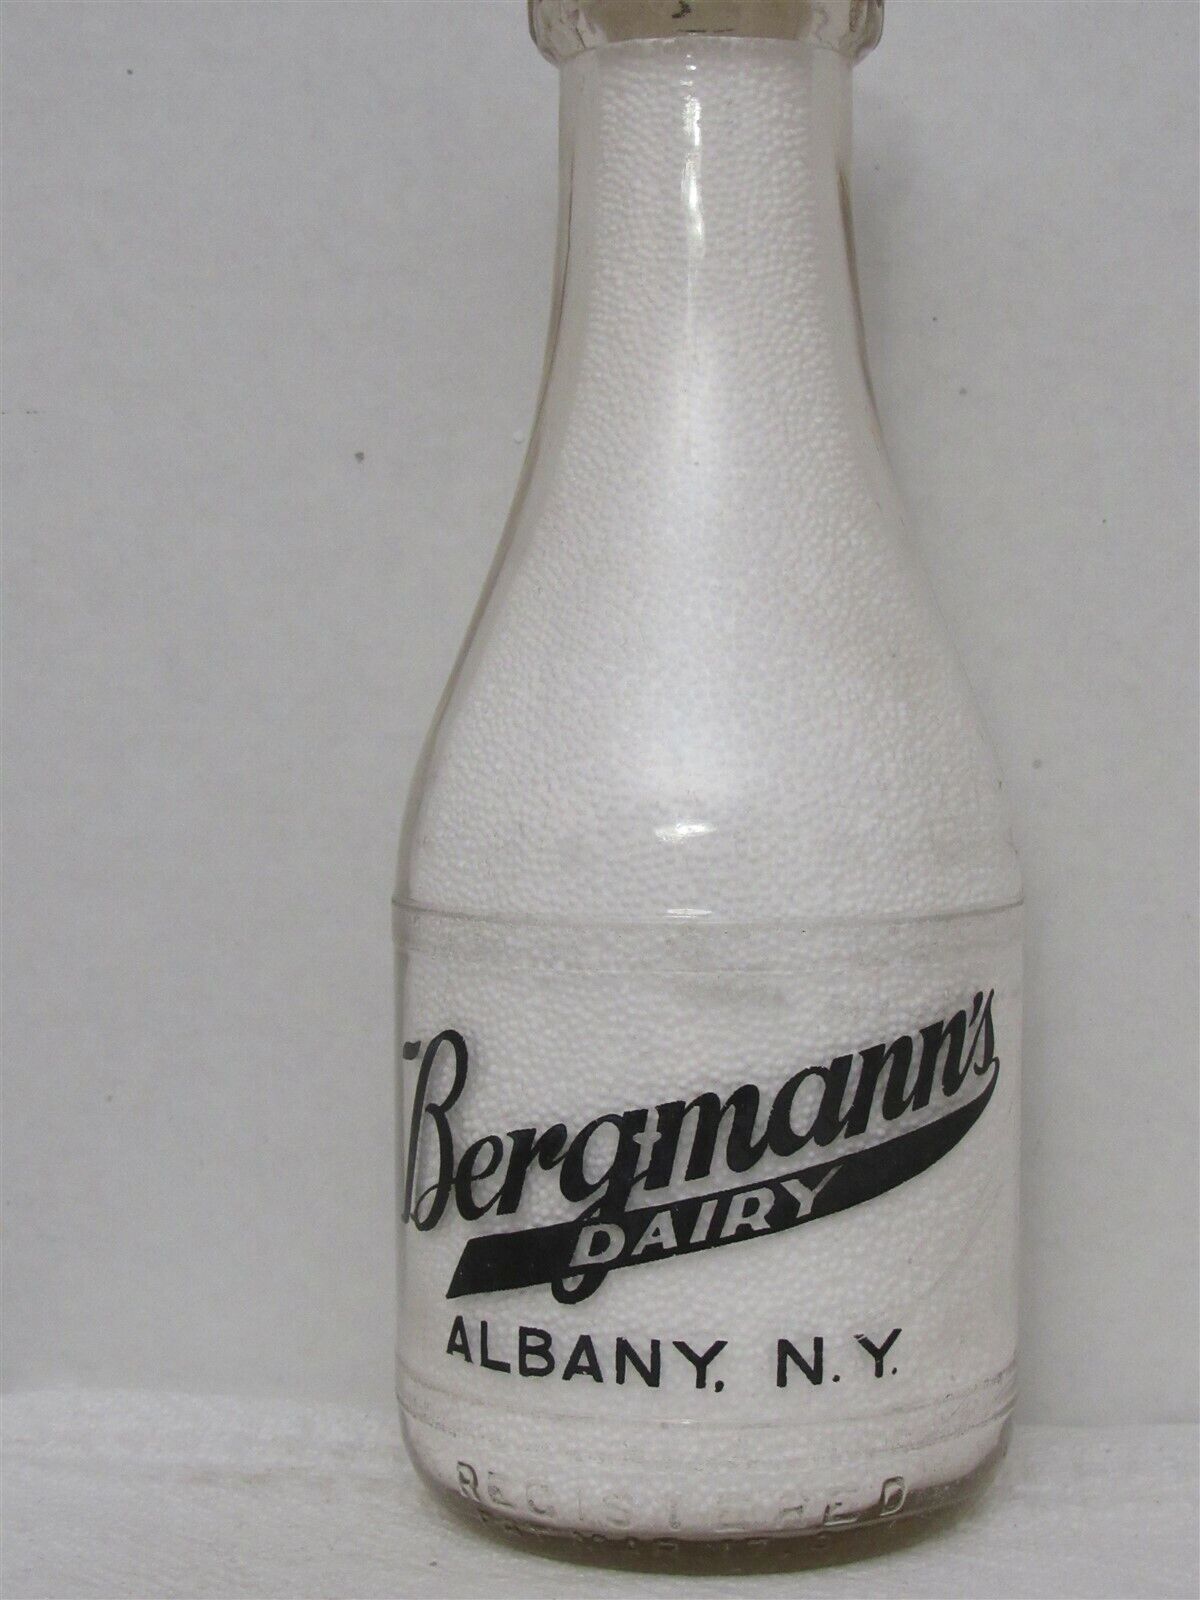 TRPQ Milk Bottle Bergmann Bergmann\'s Dairy Farm Albany NY ALBANY COUNTY 1942